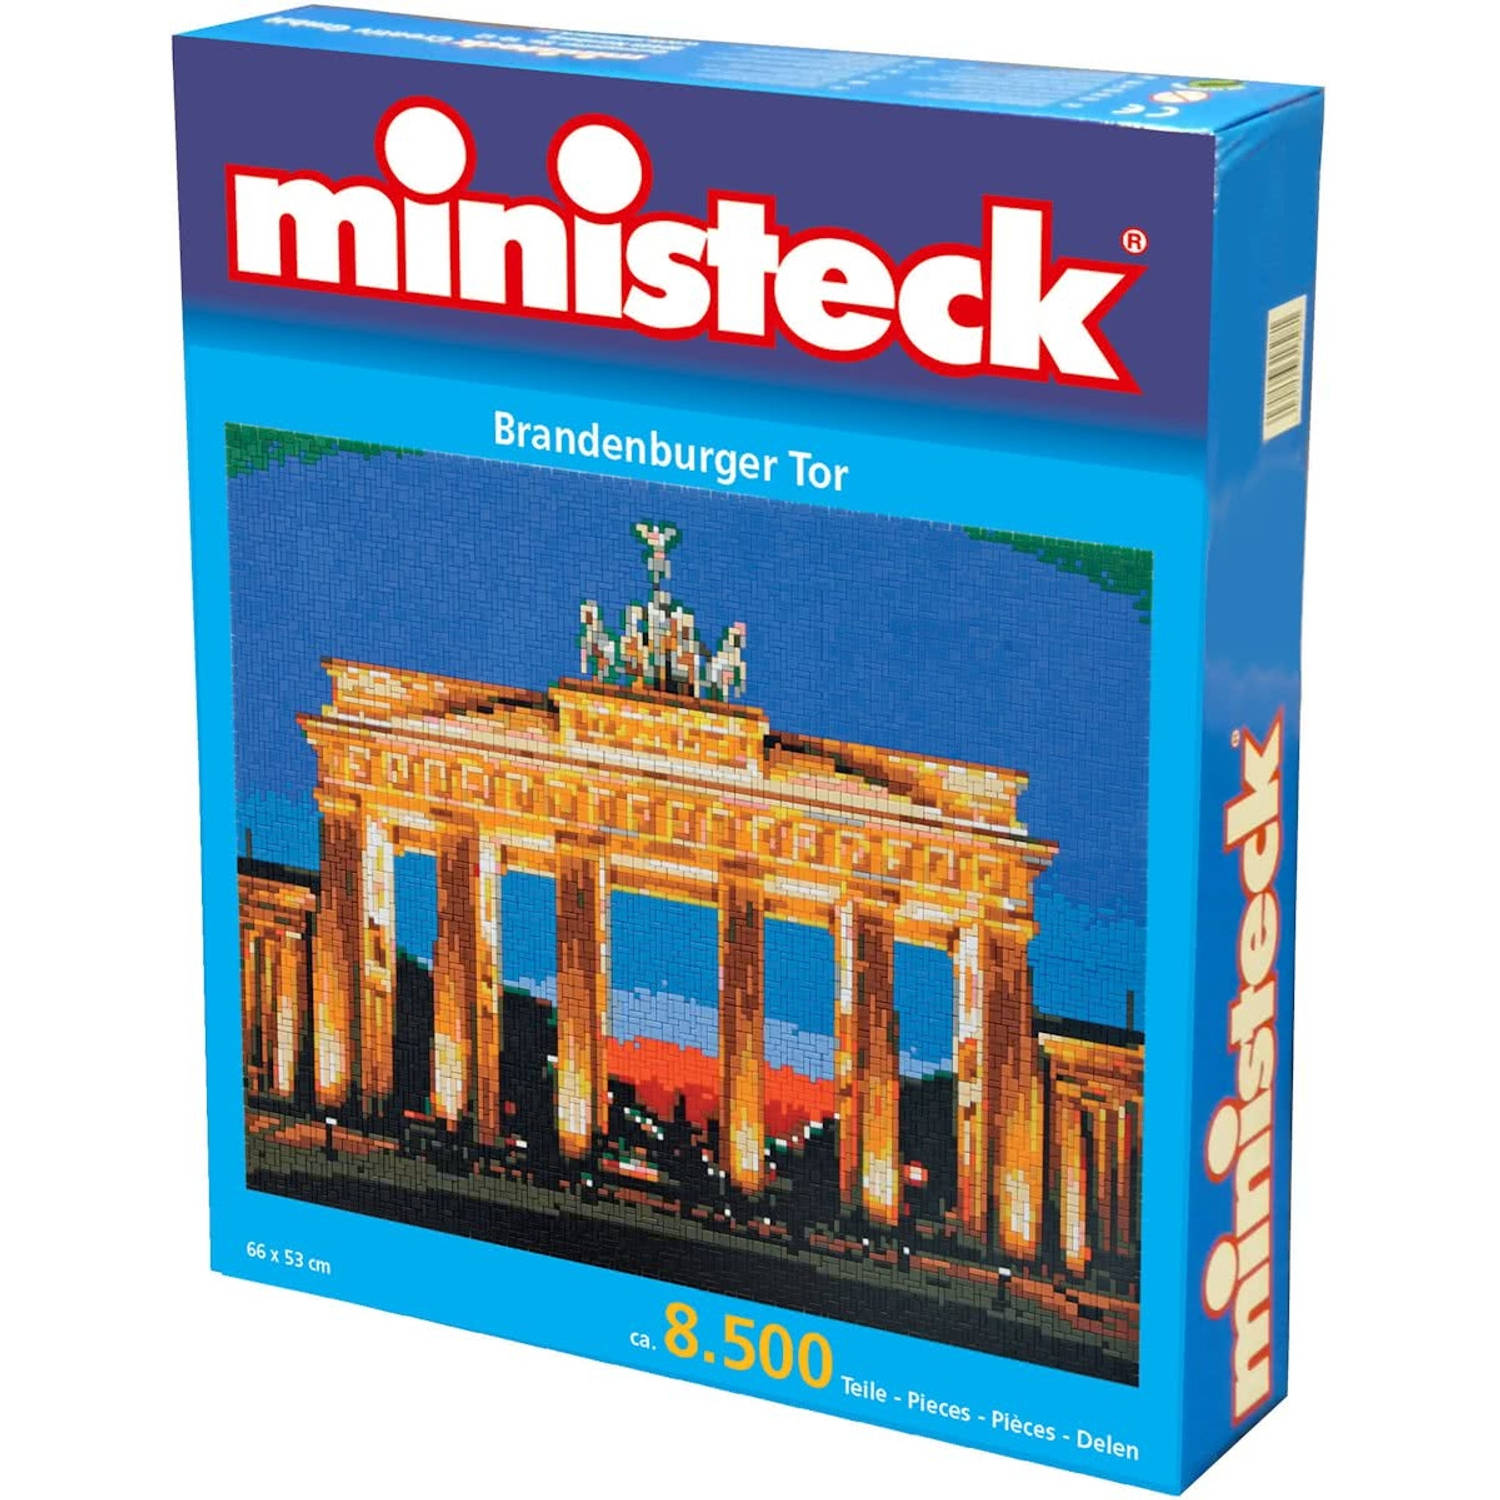 Ministeck Brandenburger Tor 8700 delig